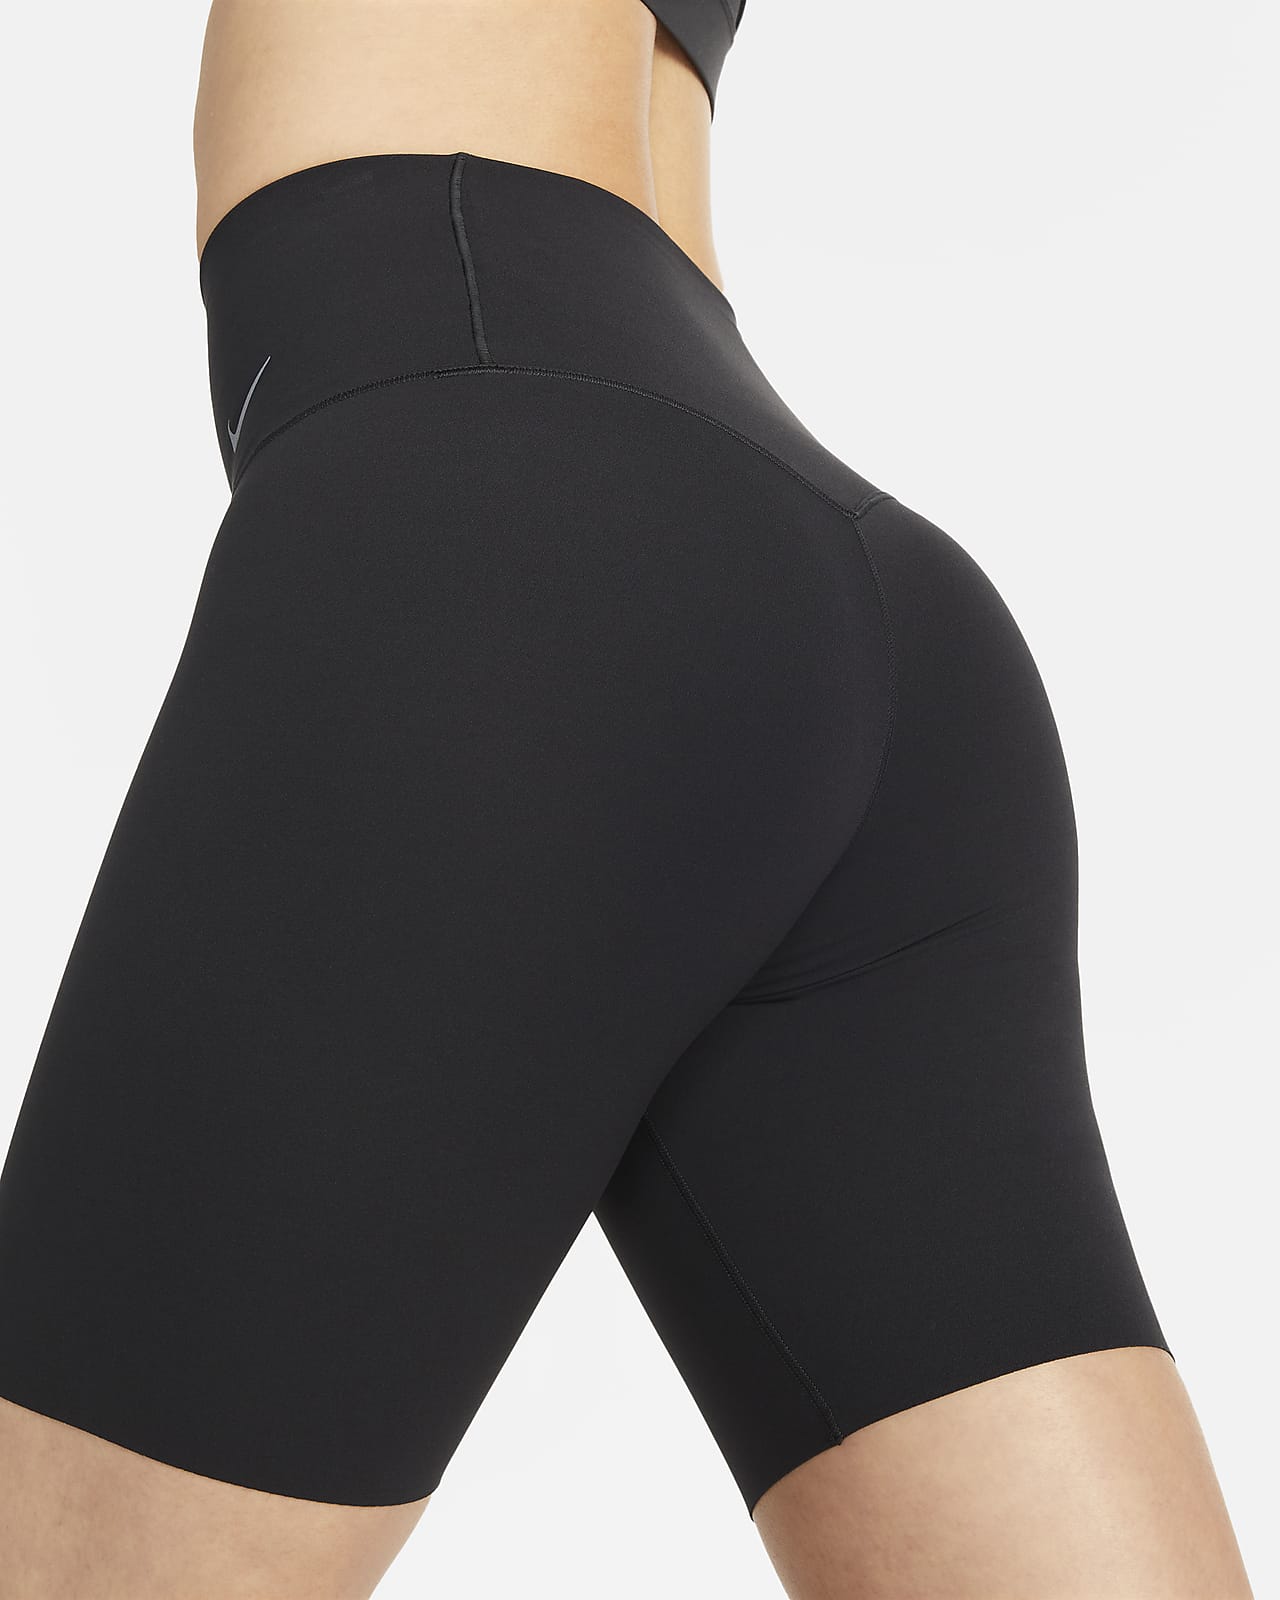 Women's Knee Length Leggings-High Waisted Capri Pants Biker Shorts for  Women Yoga Workout Exercise Short Casual Summer 01-black,black,black(pockets)  Large-X-Large